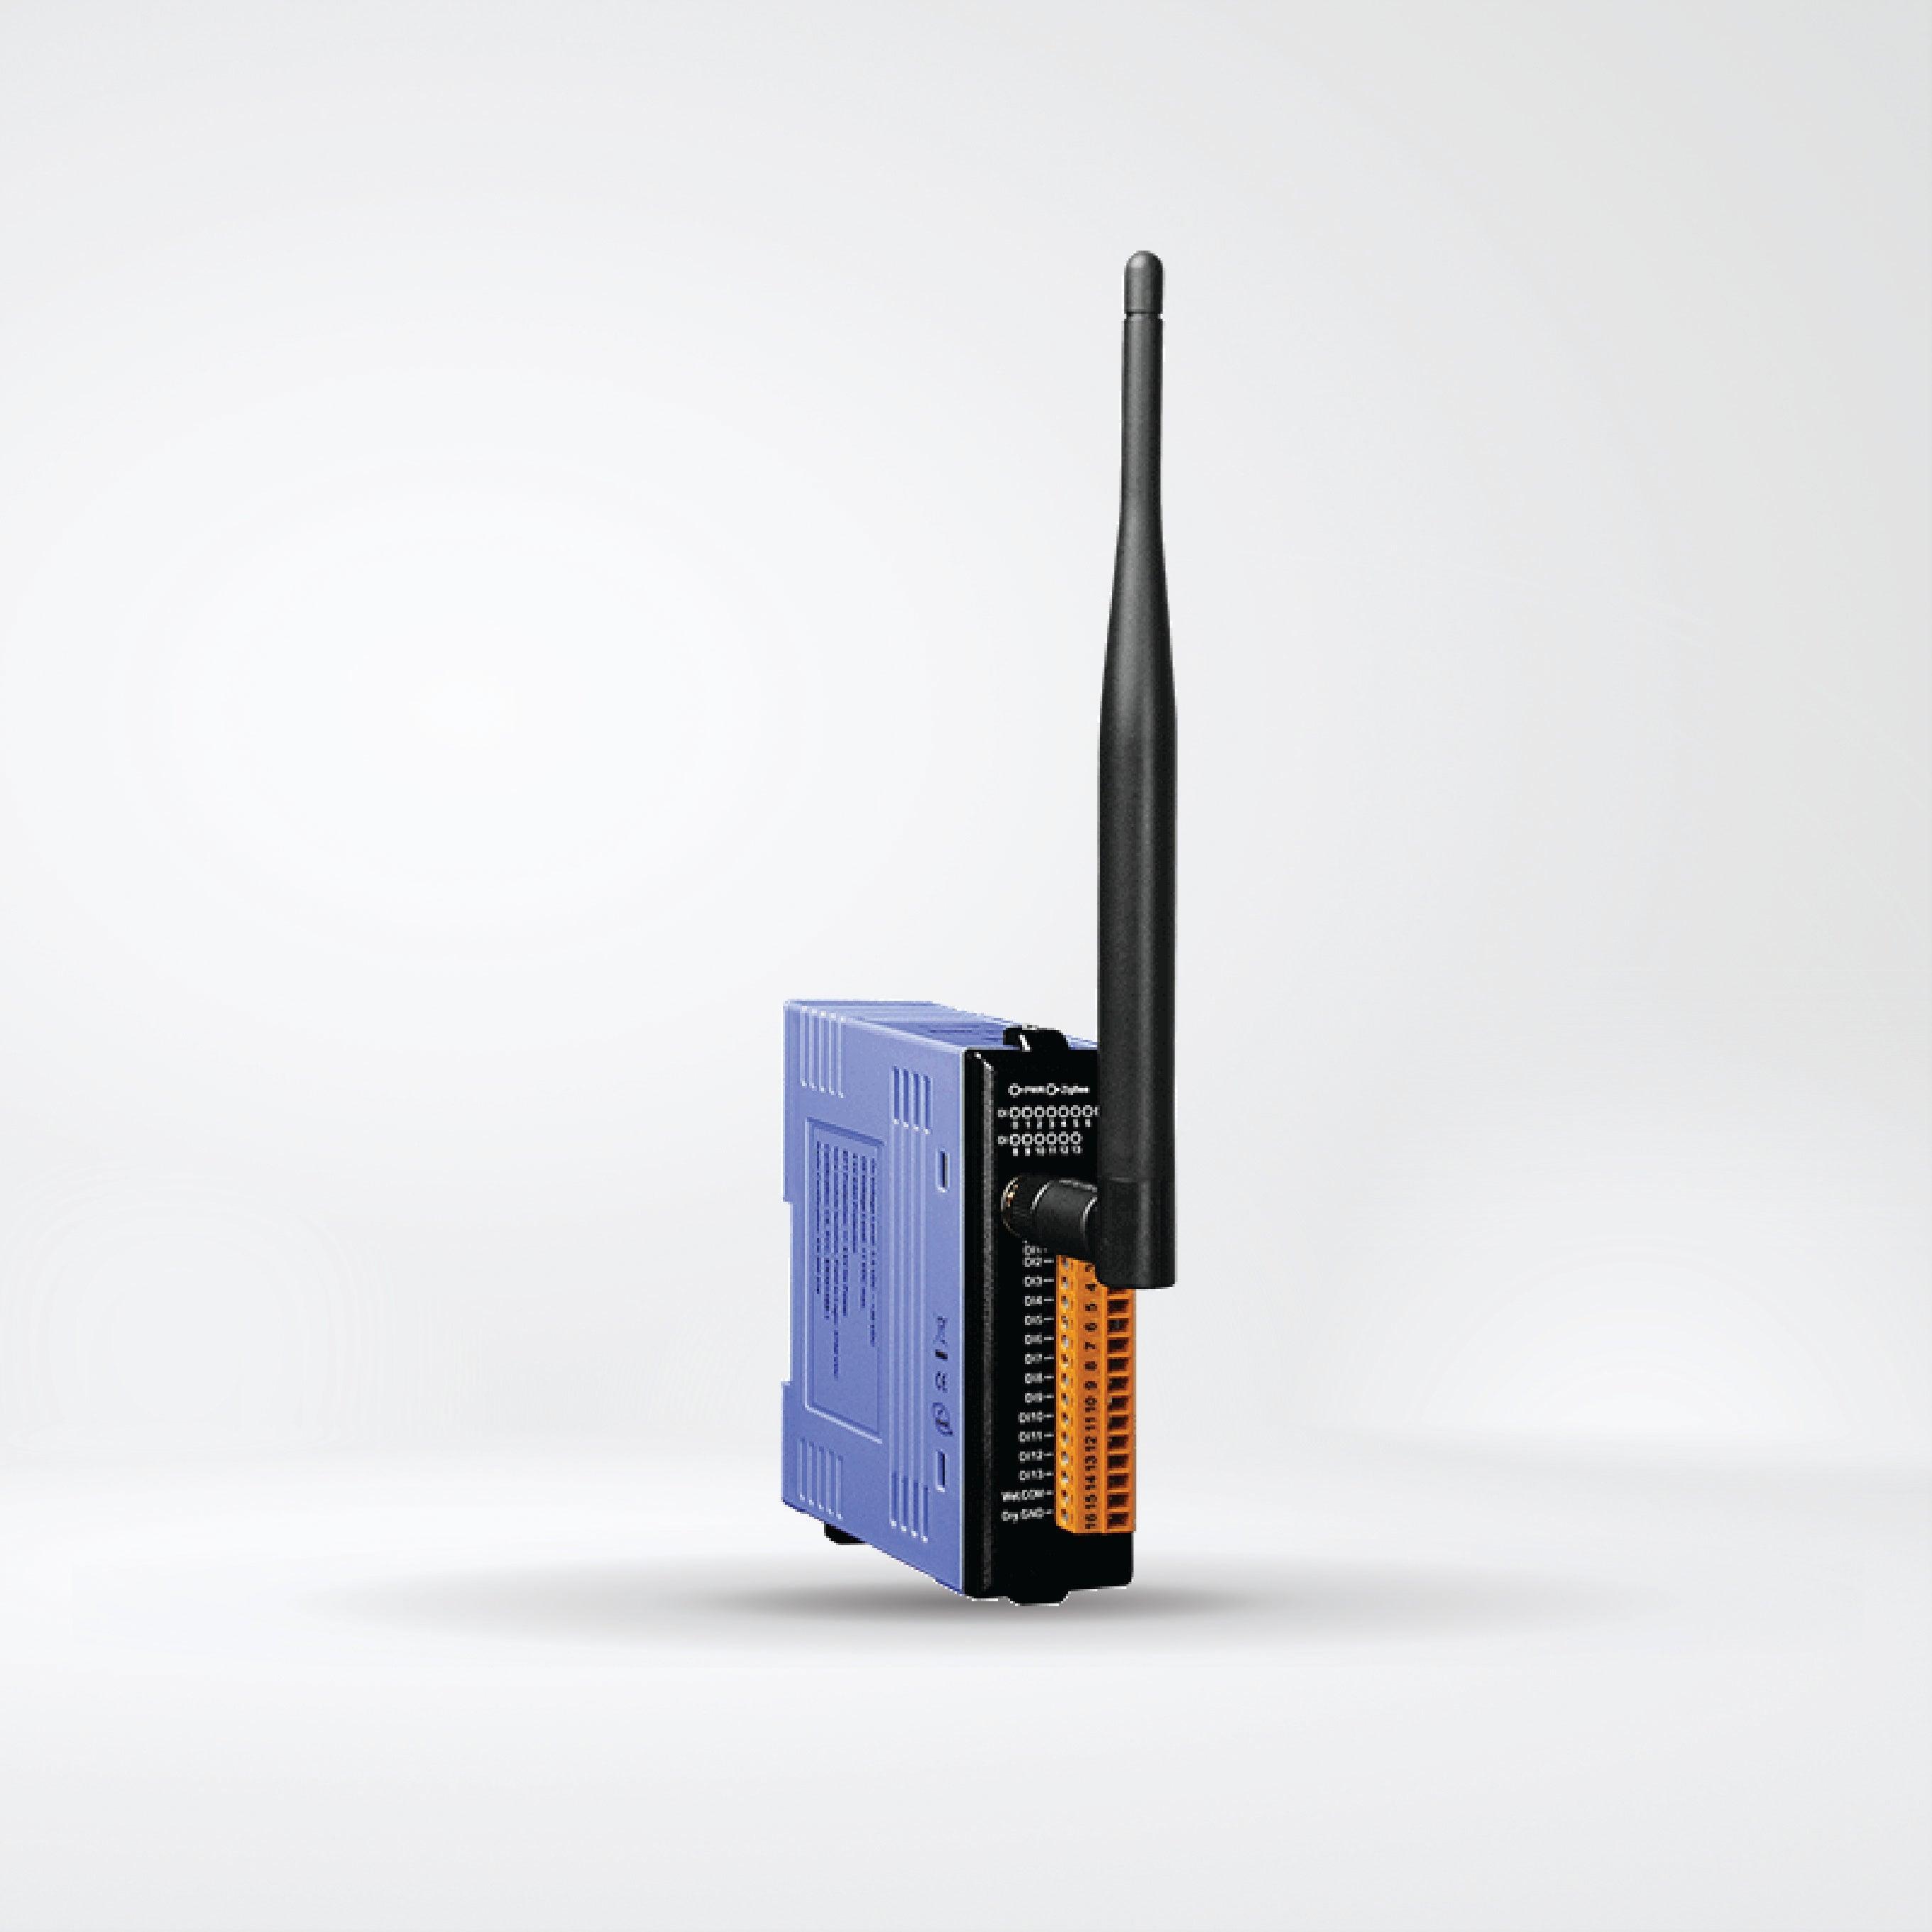 ZT-2053 ZigBee Wireless 14-ch Isolated DI Module (ZigBee Router)(Asia Only) - Riverplus